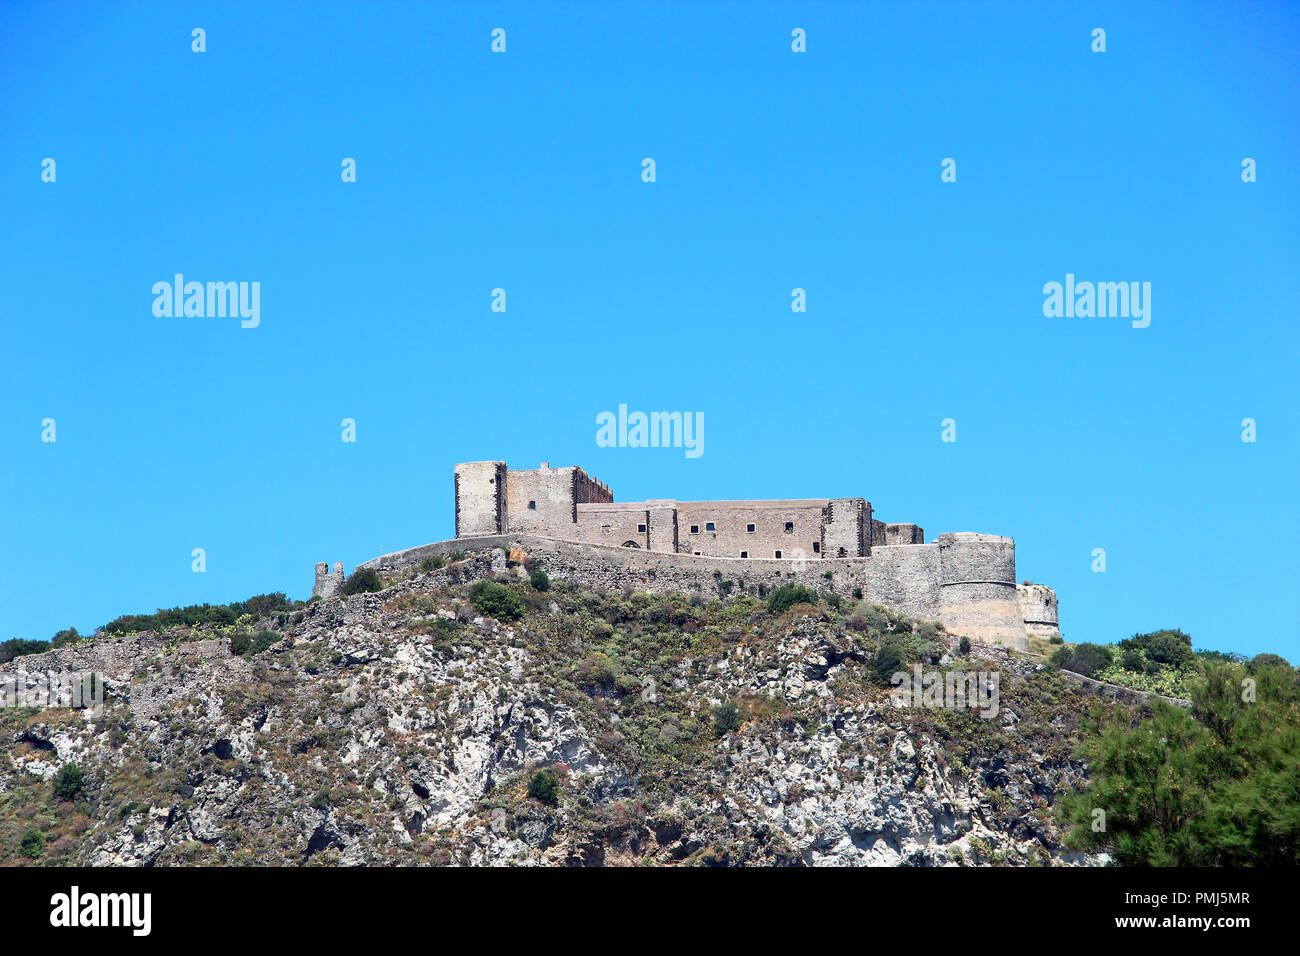 Milazzo château (Castello di Milazzo), Sicile, Italie Banque D'Images